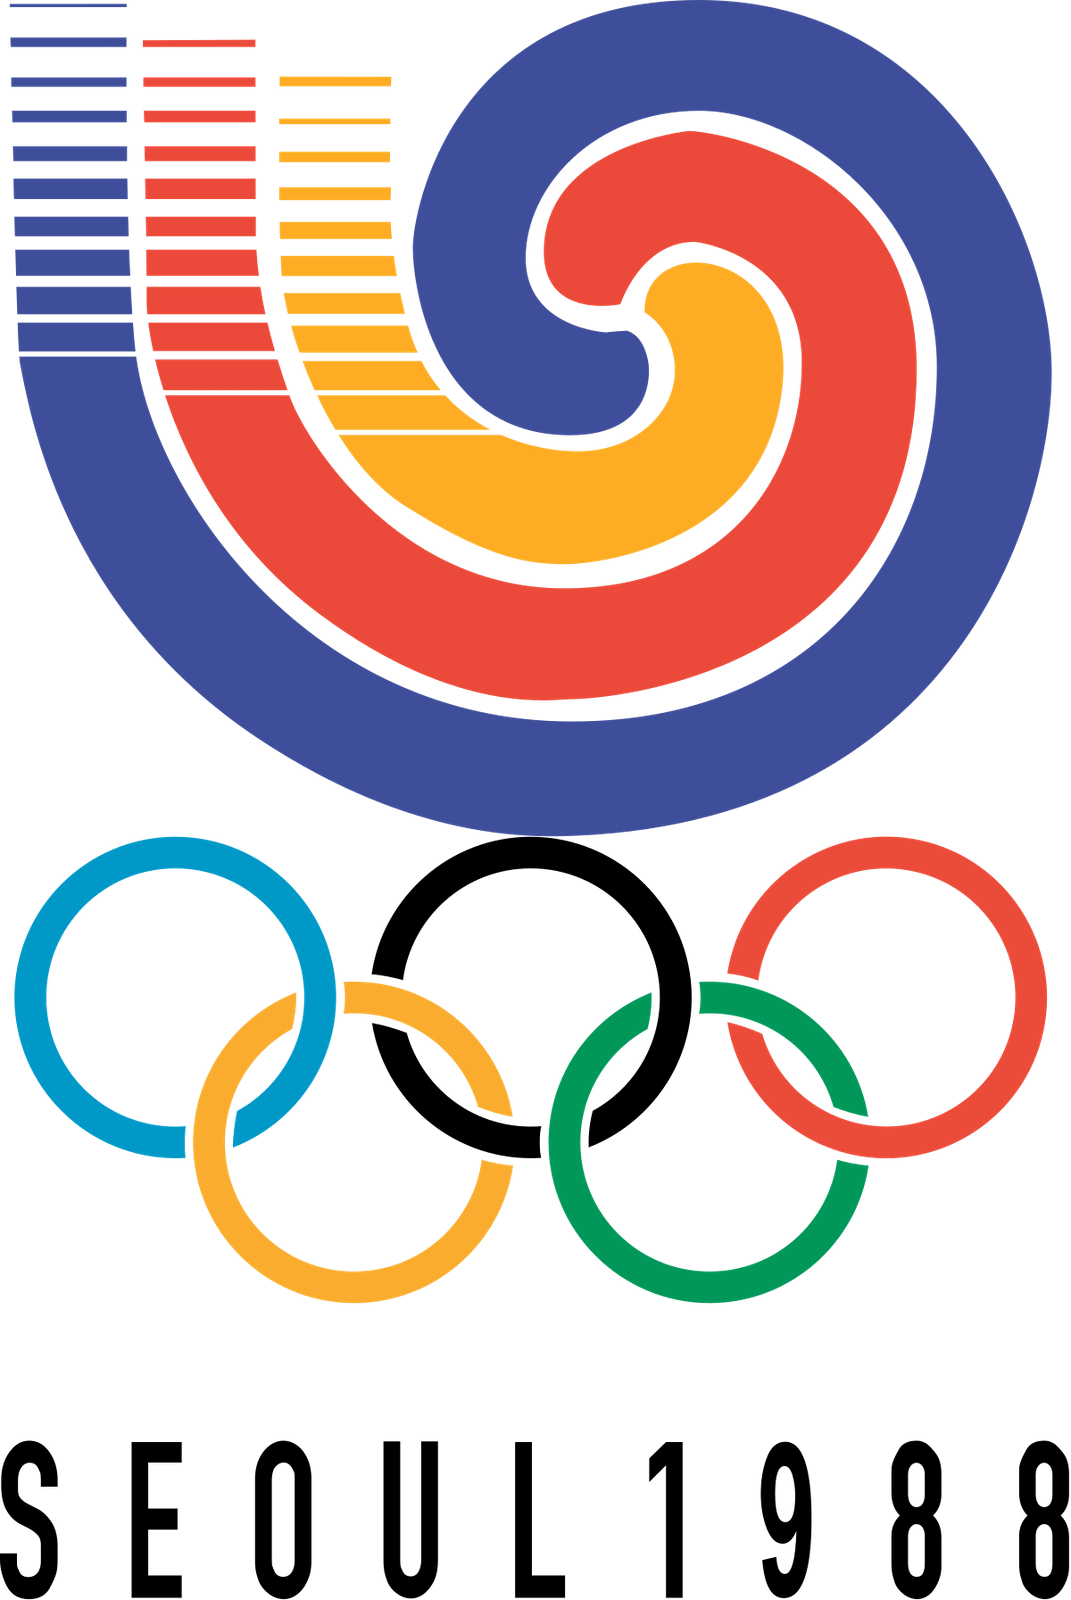 New Paris 2024 Olympic Games logo revealed